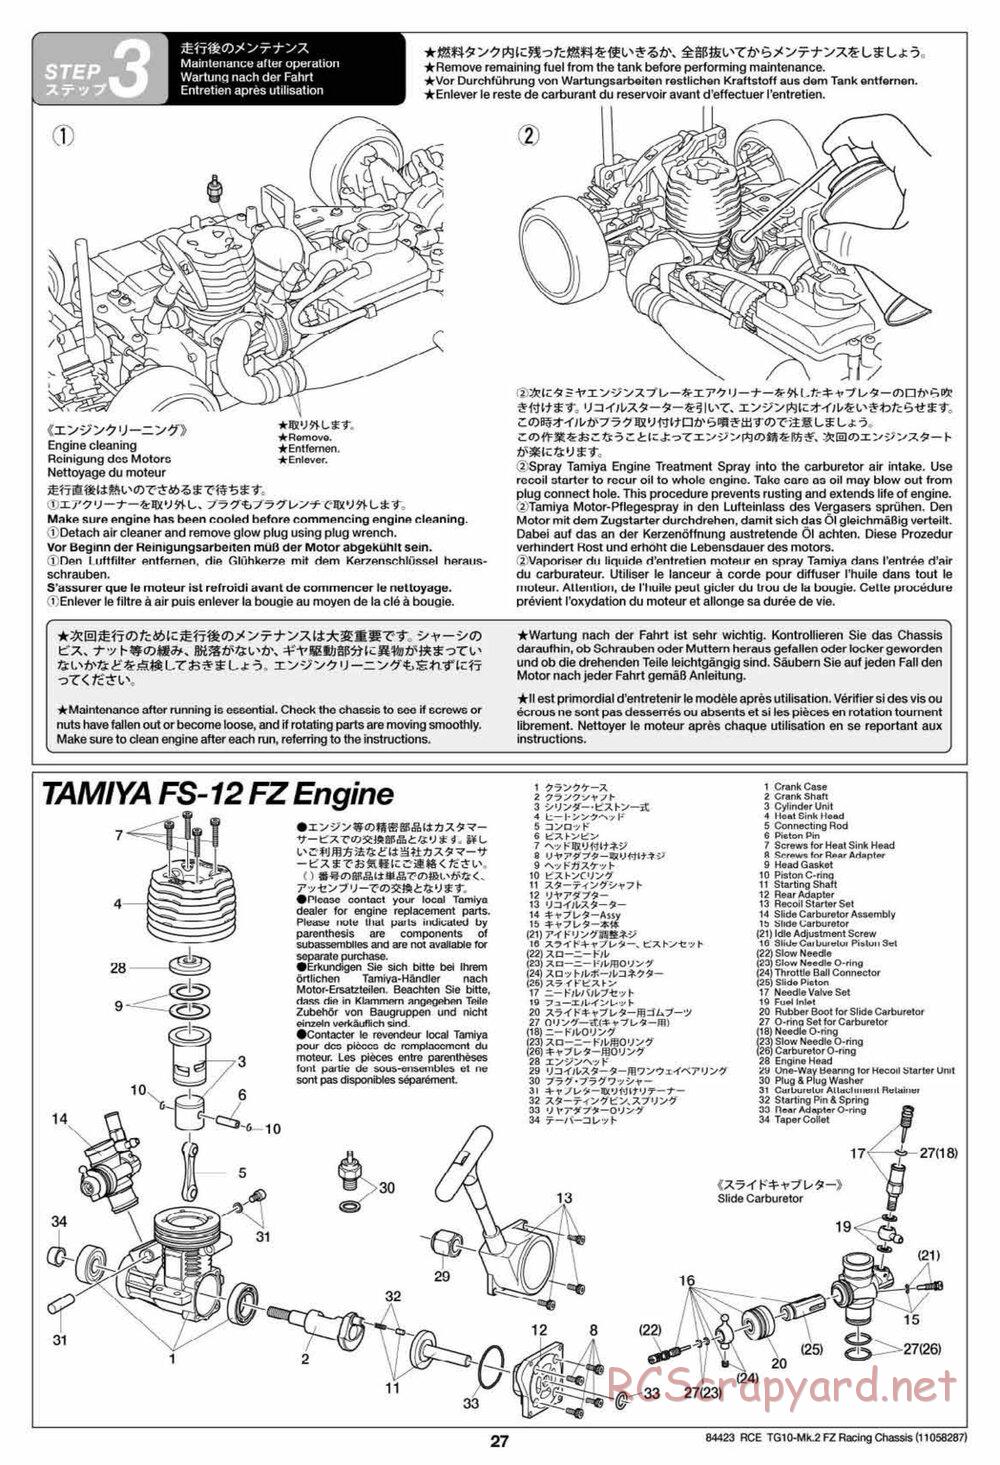 Tamiya - TG10 Mk.2 FZ Racing Chassis - Manual - Page 27